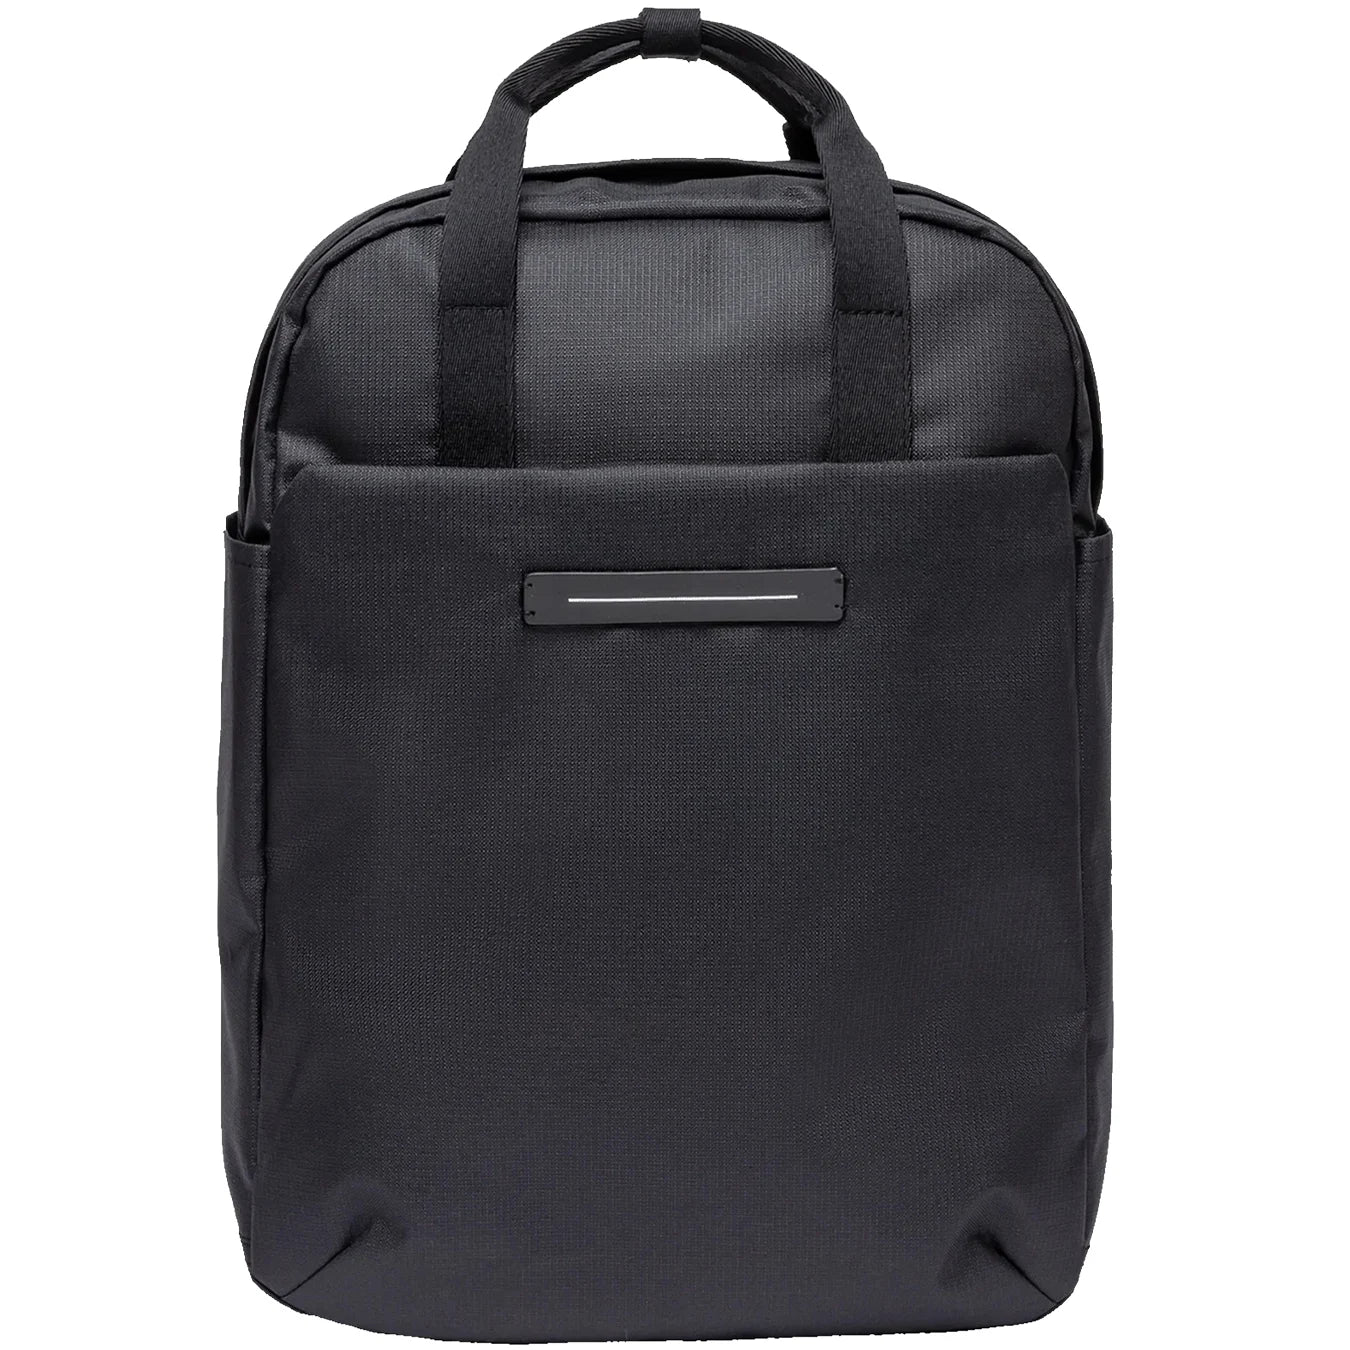 Horizn Studios Shibuya Totepack backpack 39 cm - black